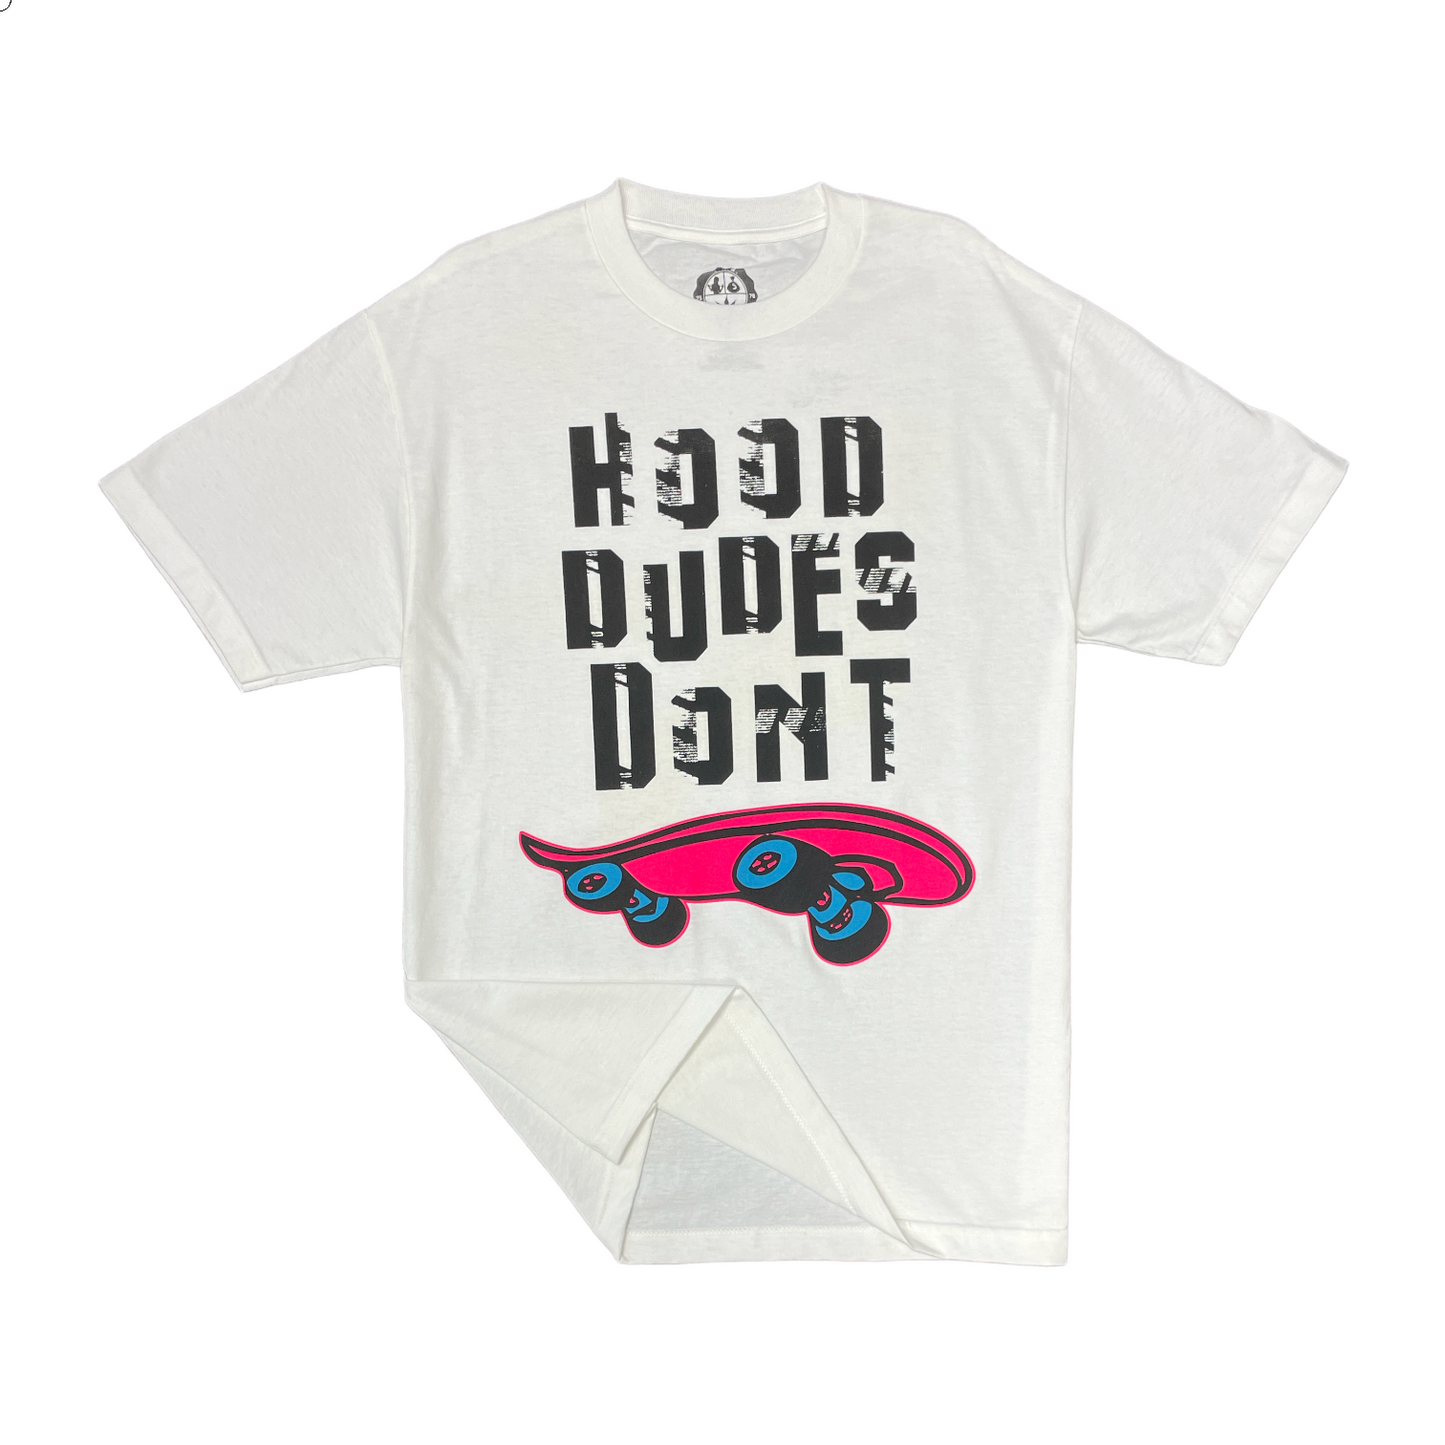 Hood Dude Skate - S.M.W Brand Men's Streetwear T-Shirt